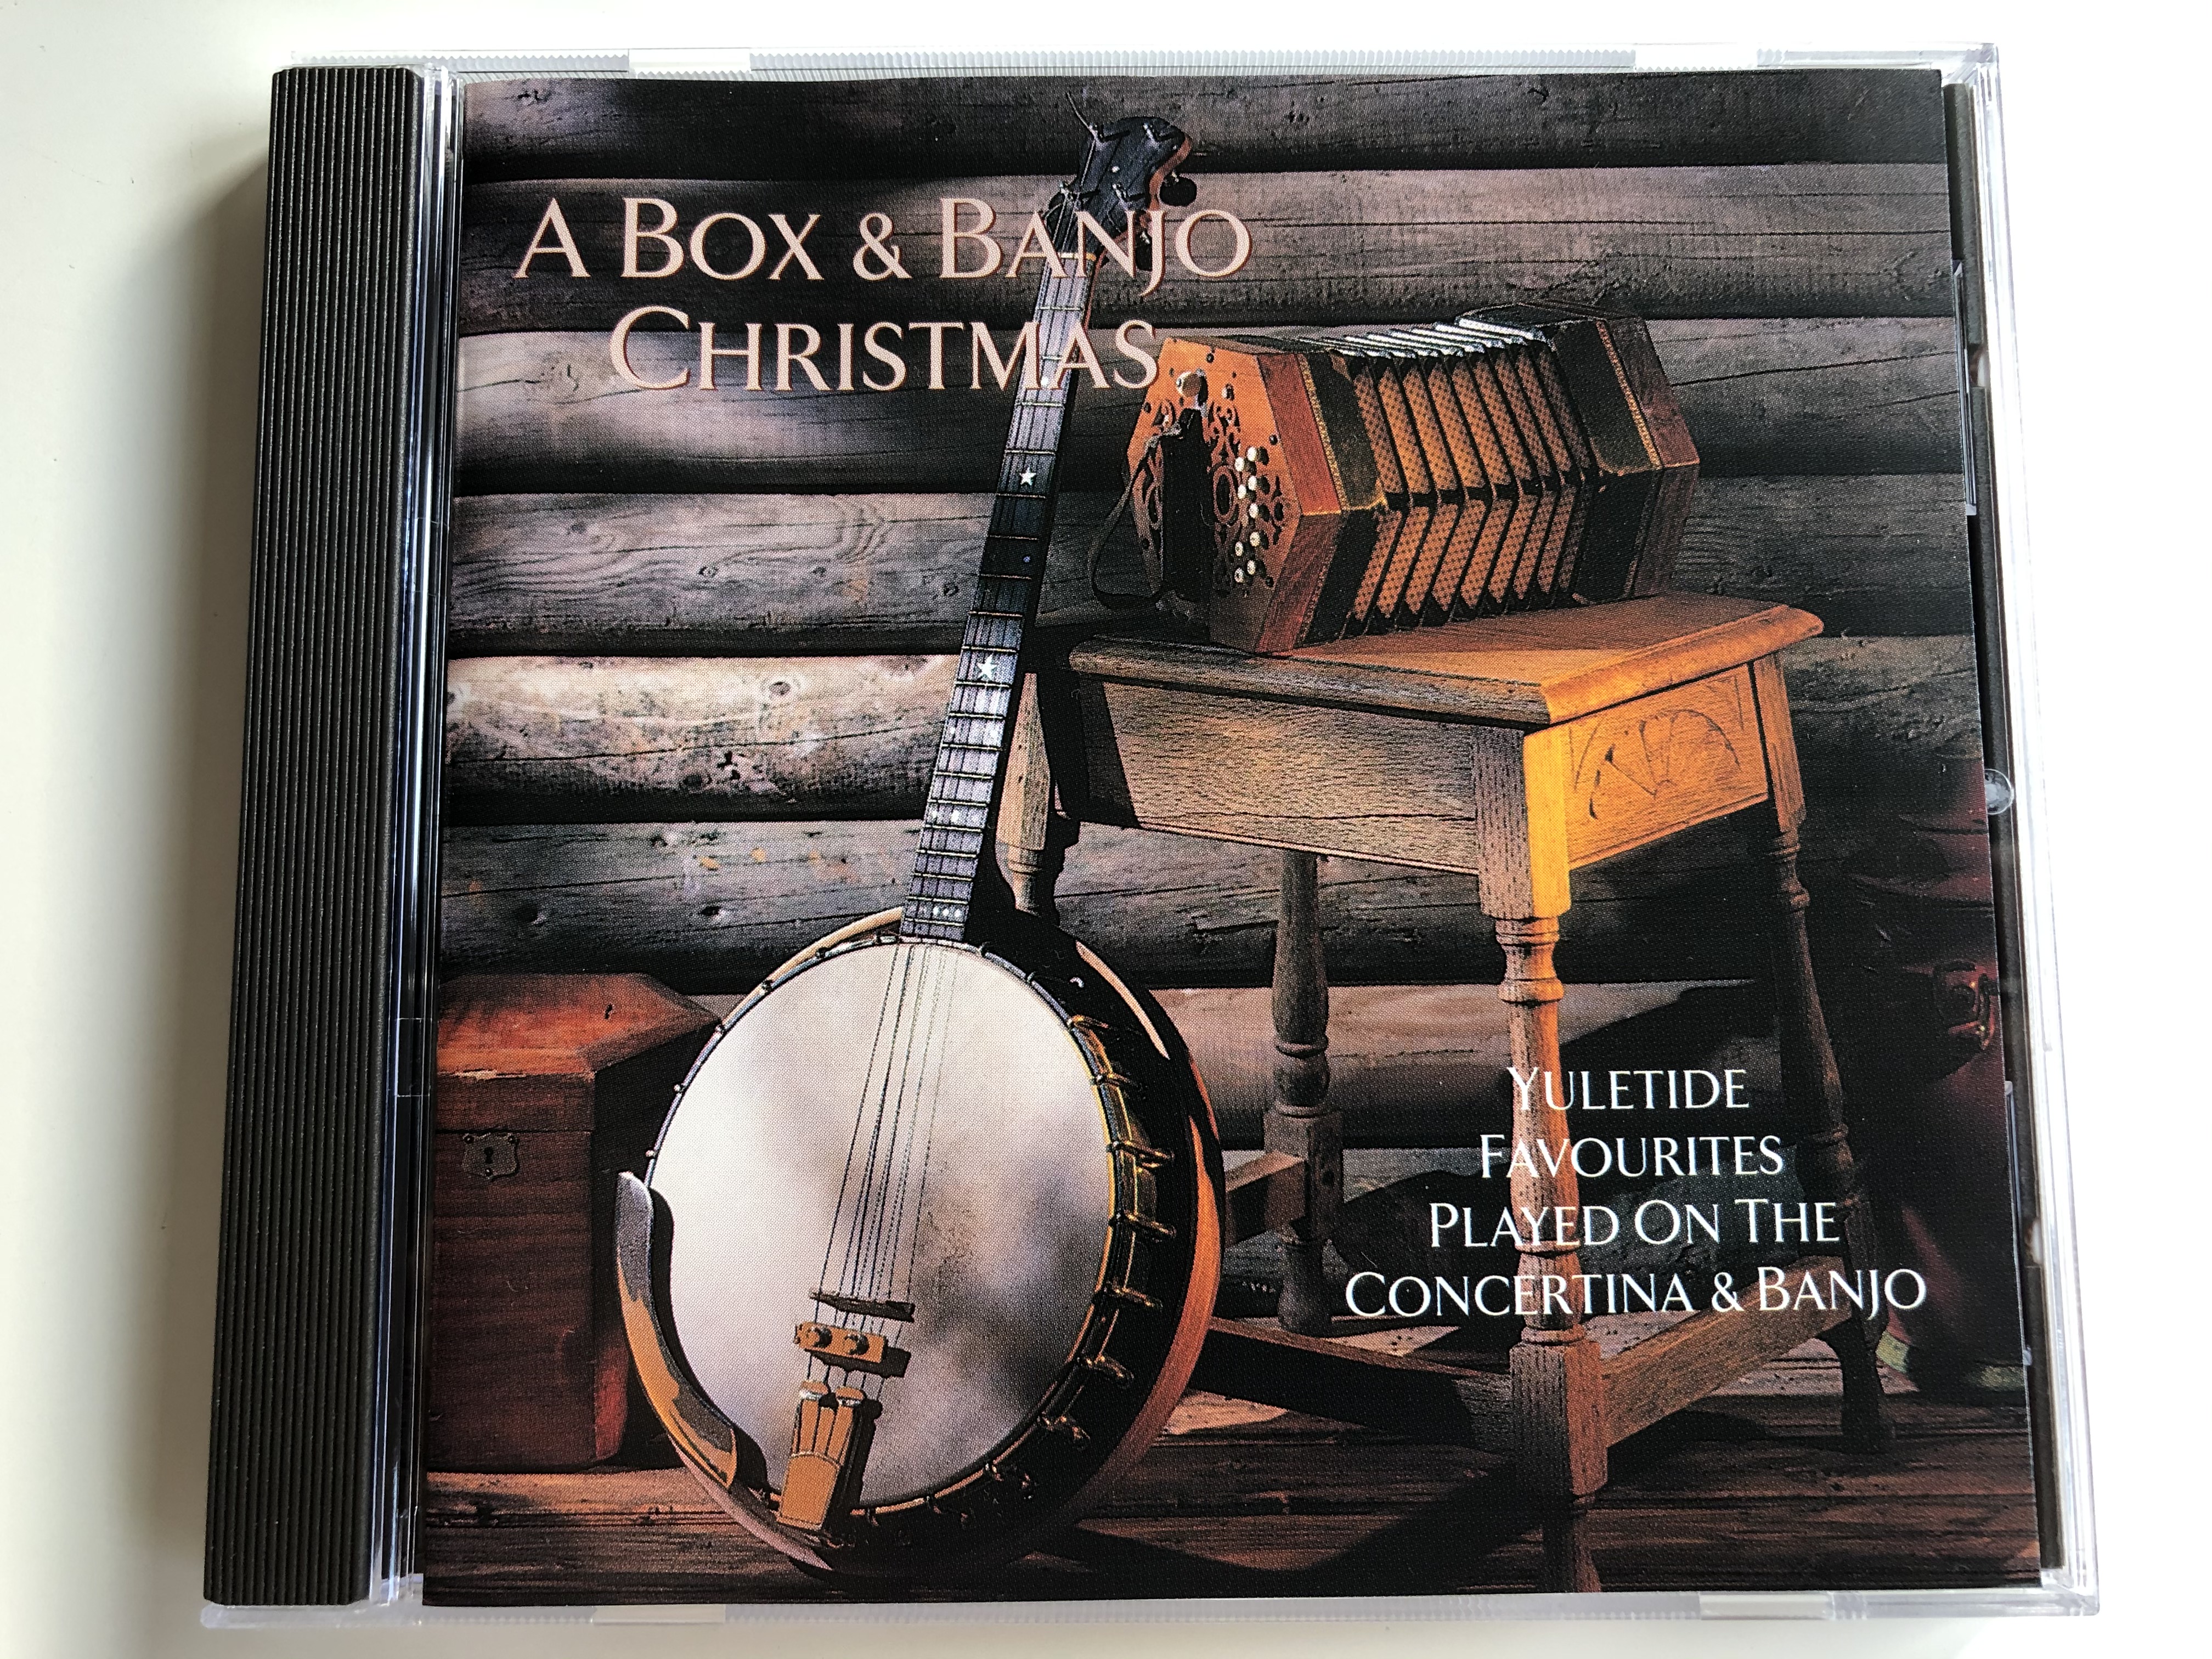 a-box-banjo-christmas-yuletide-favourites-played-on-the-concertina-banjo-hallmark-audio-cd-1996-305422-1-.jpg